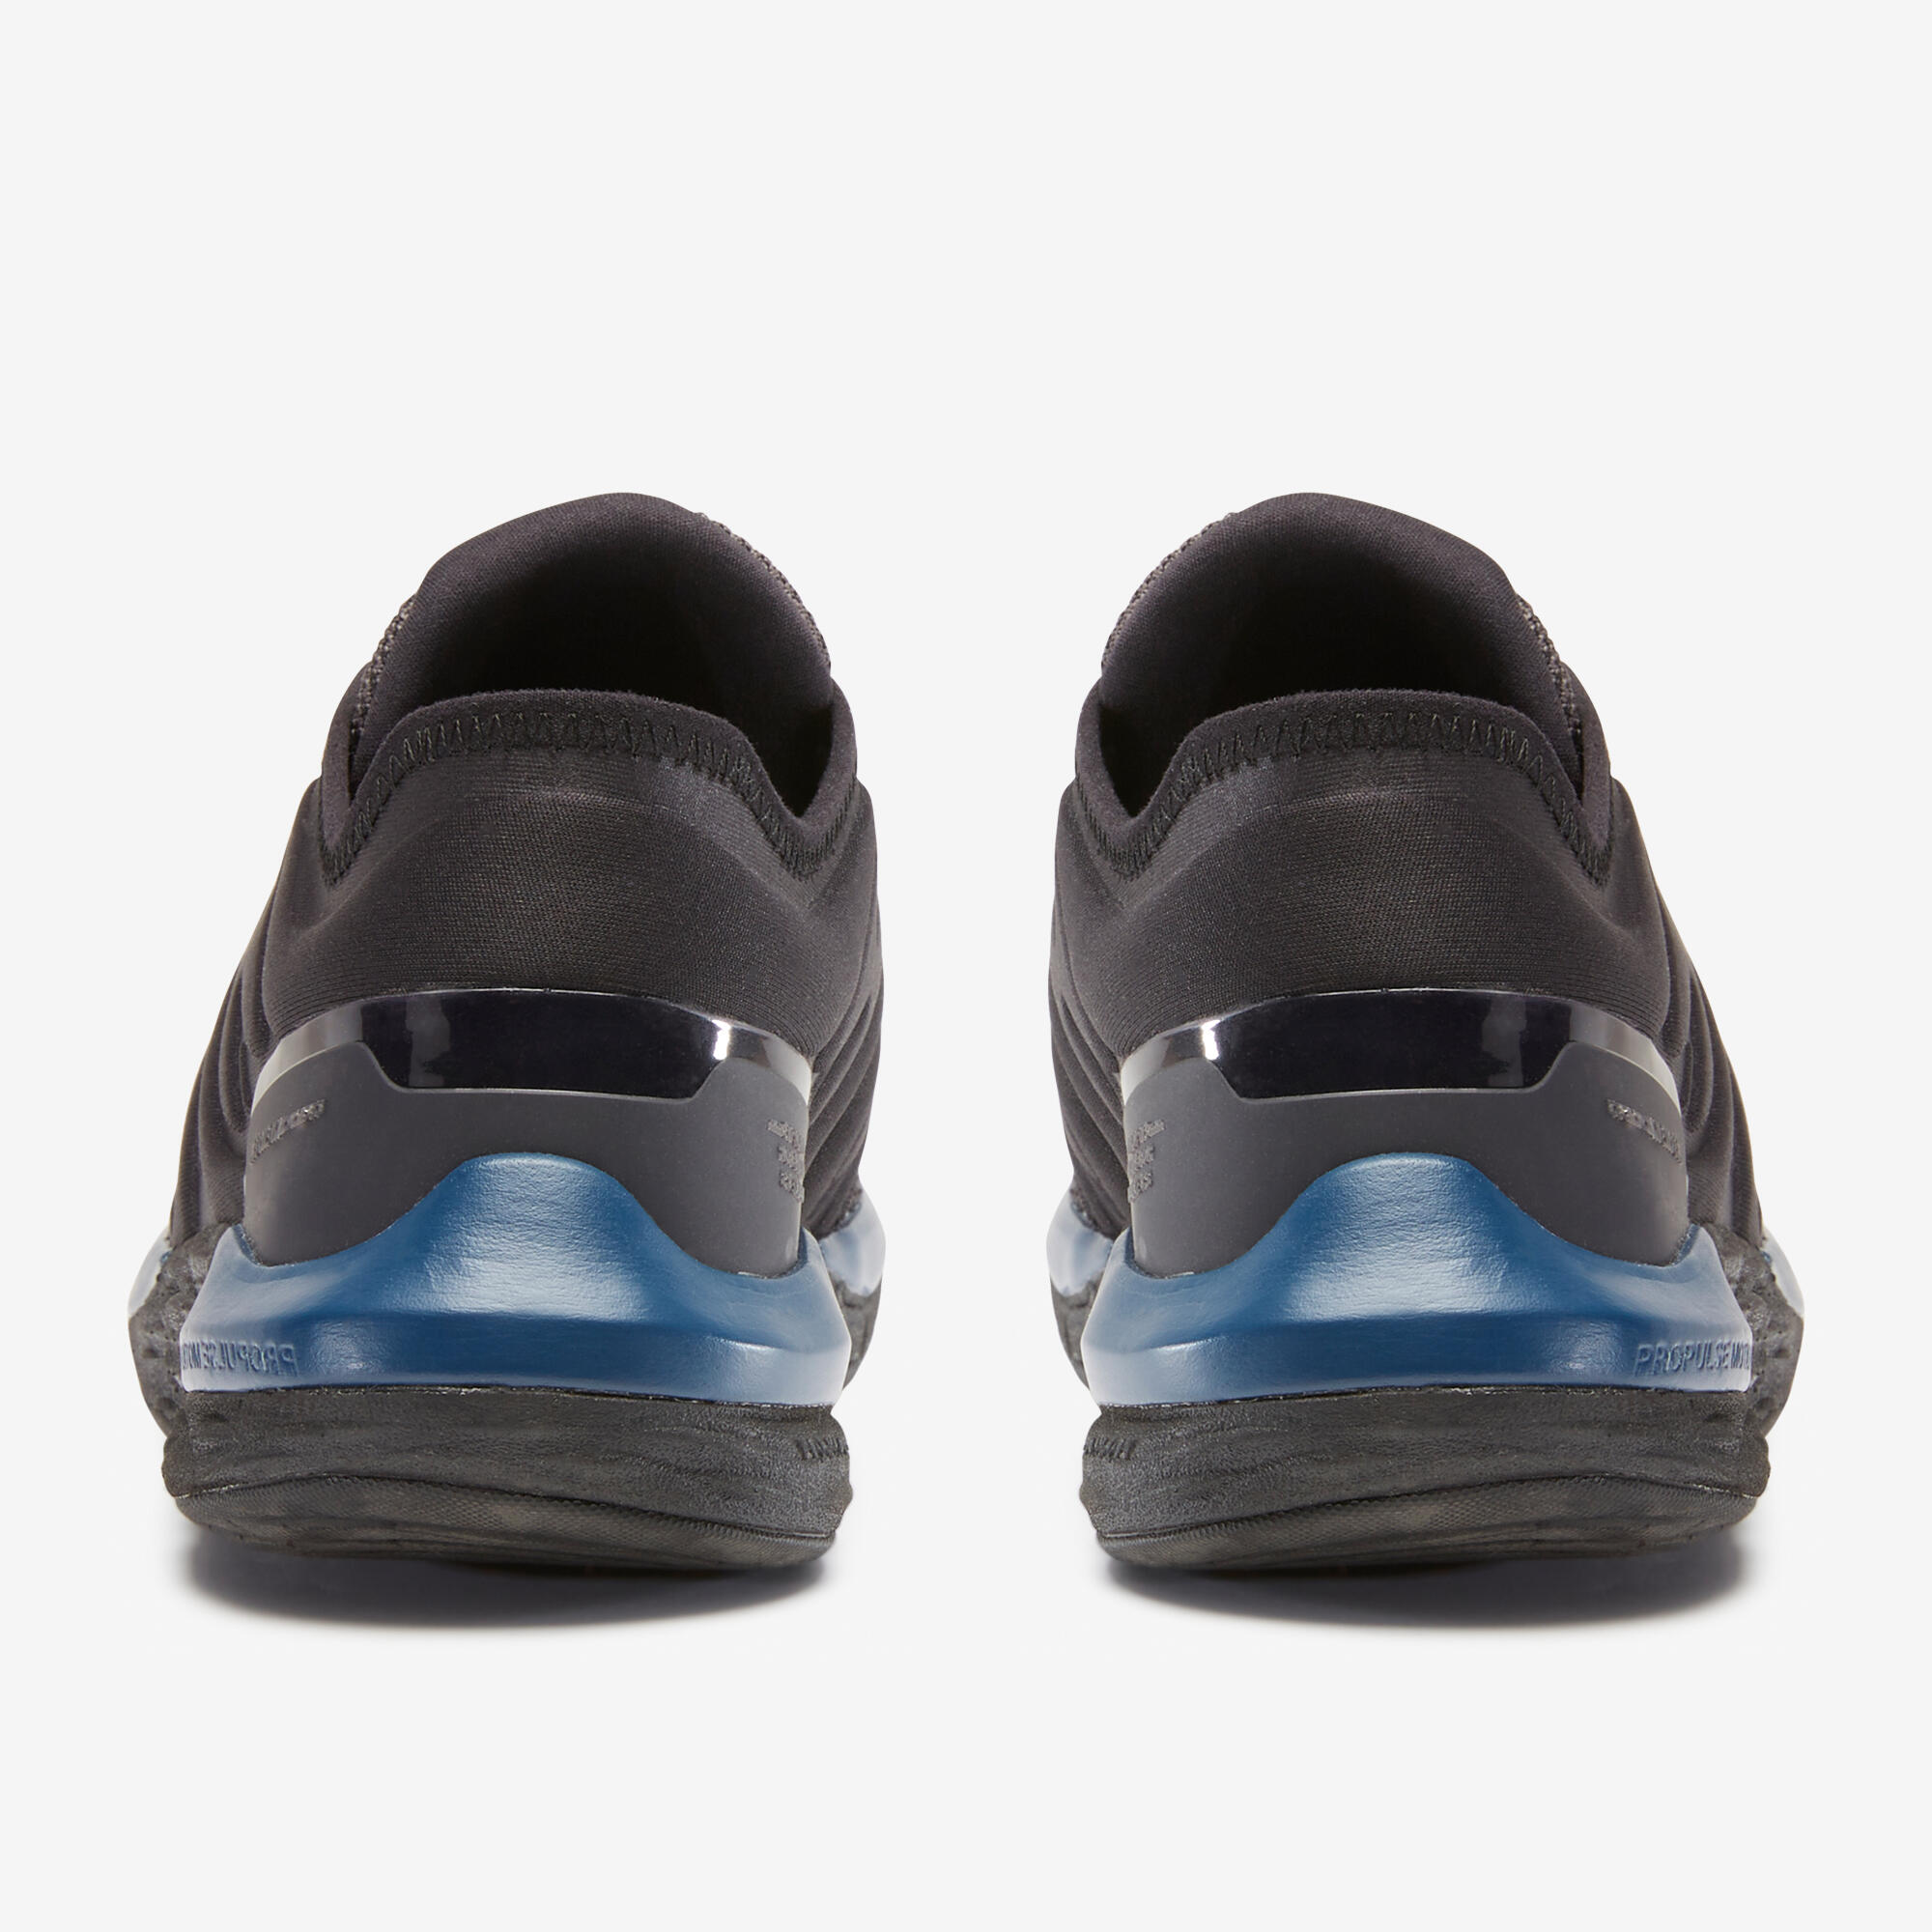 Fitness Walking Shoes Sportwalk Comfort - black/blue 6/7